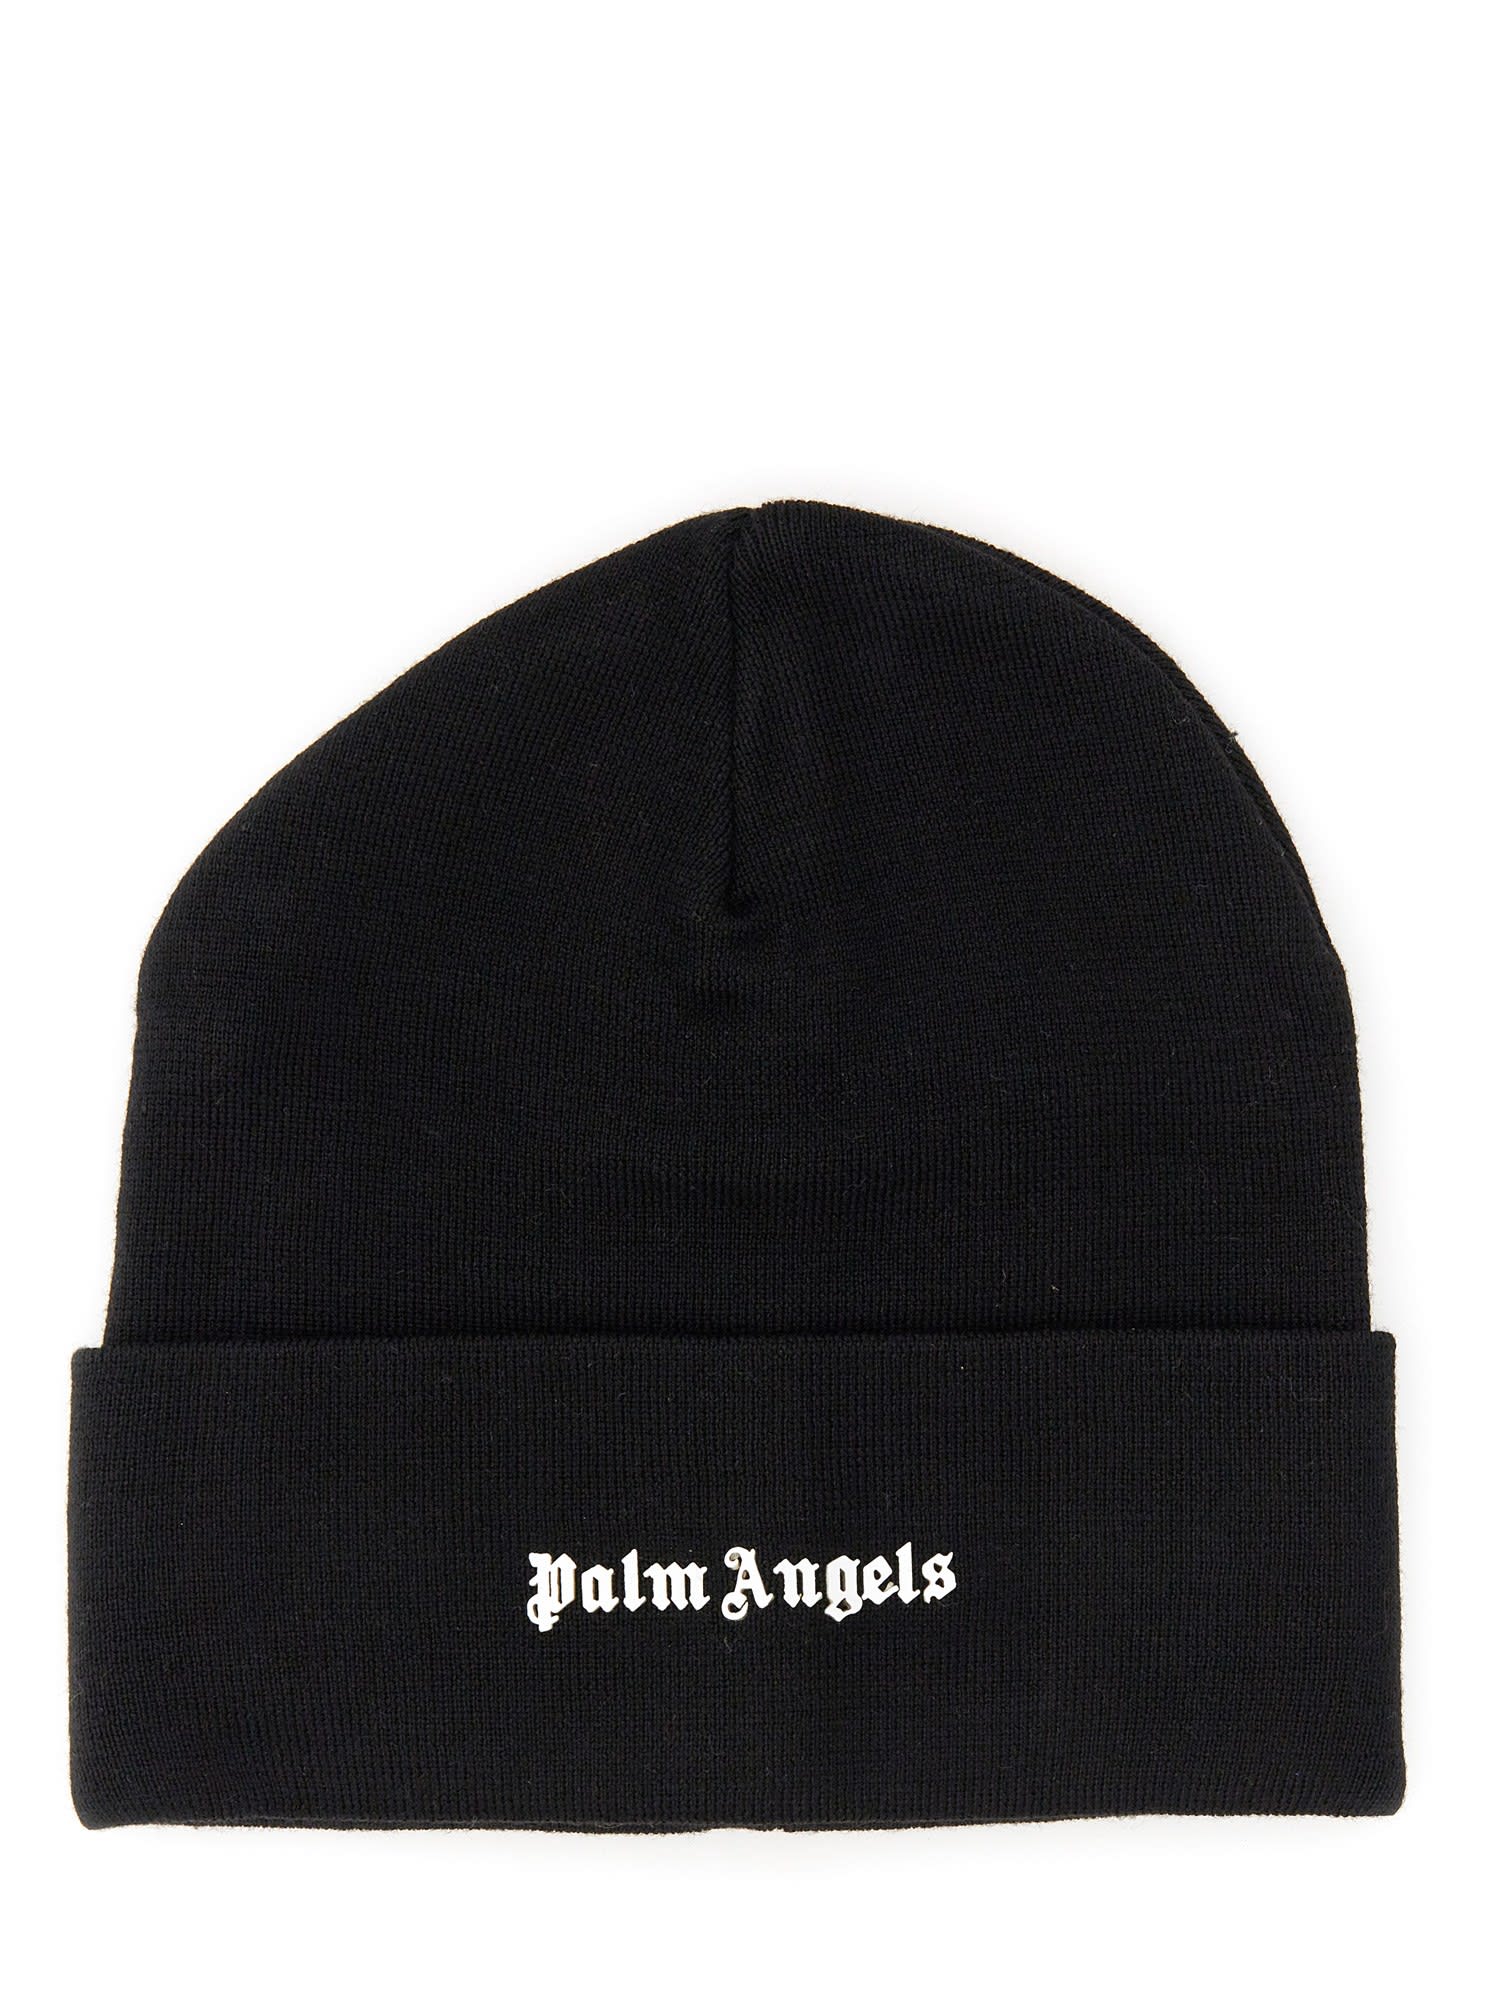 Palm Angels Knit Hat